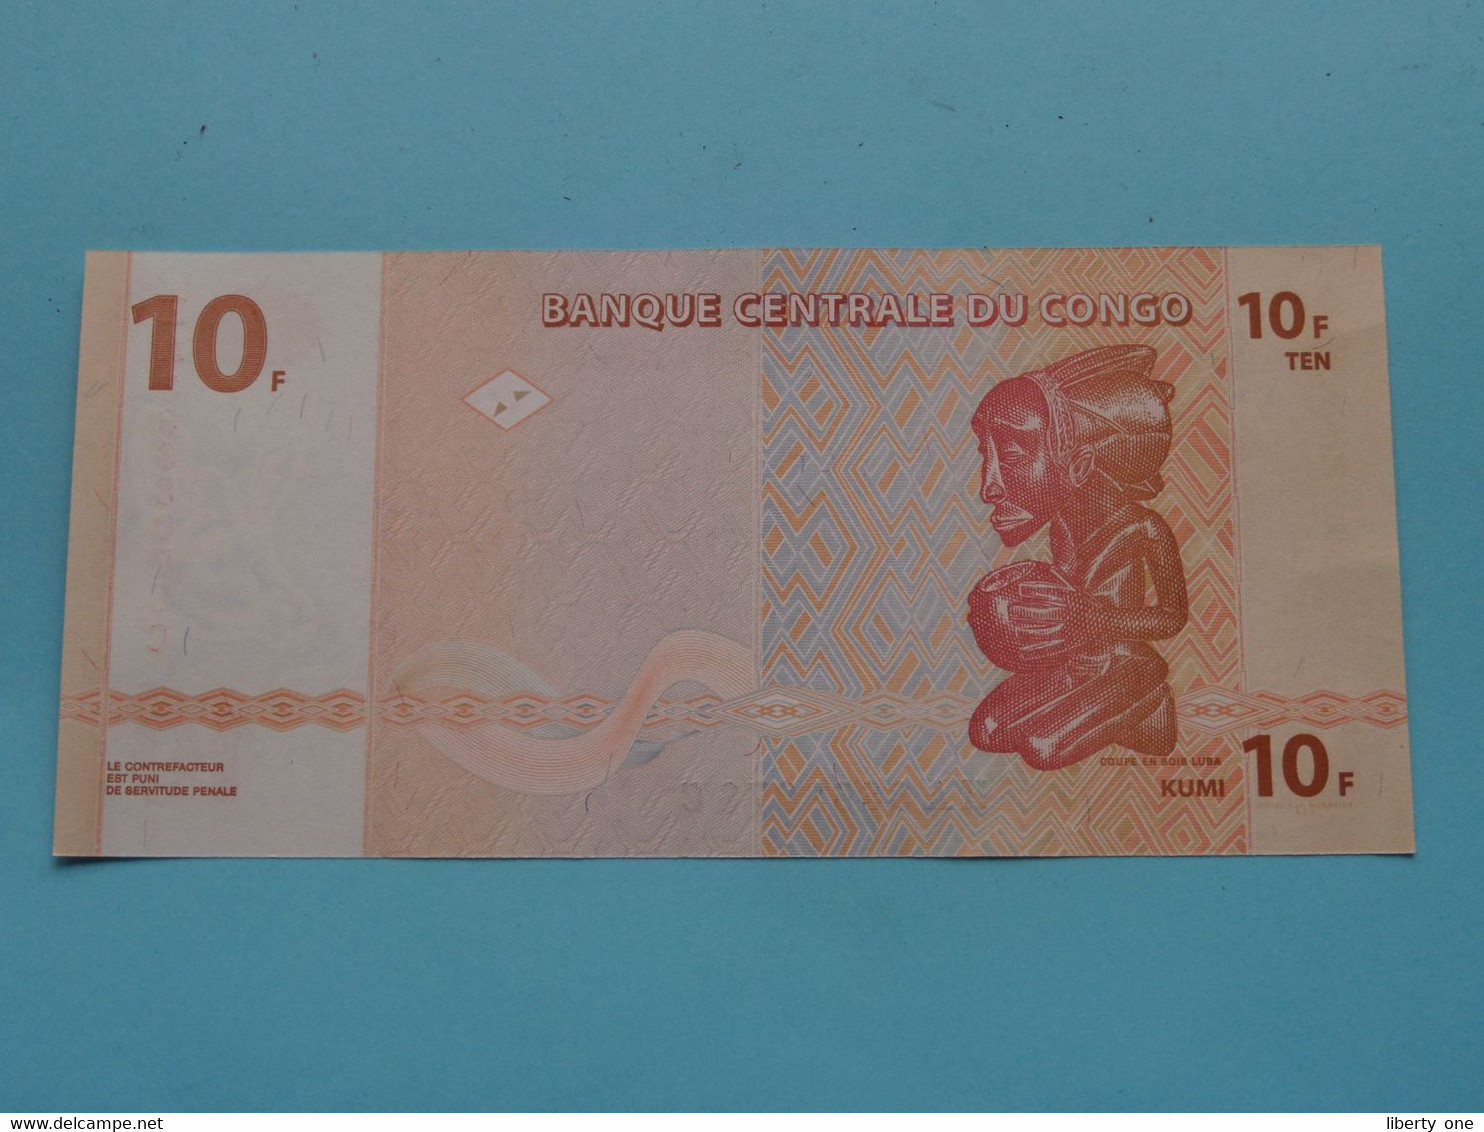 10 ( Dix ) Francs ( HA3668076C ) 2003 > Banque Centrale Du CONGO ( For Grade, Please See Photo ) UNC ! - Republiek Congo (Congo-Brazzaville)